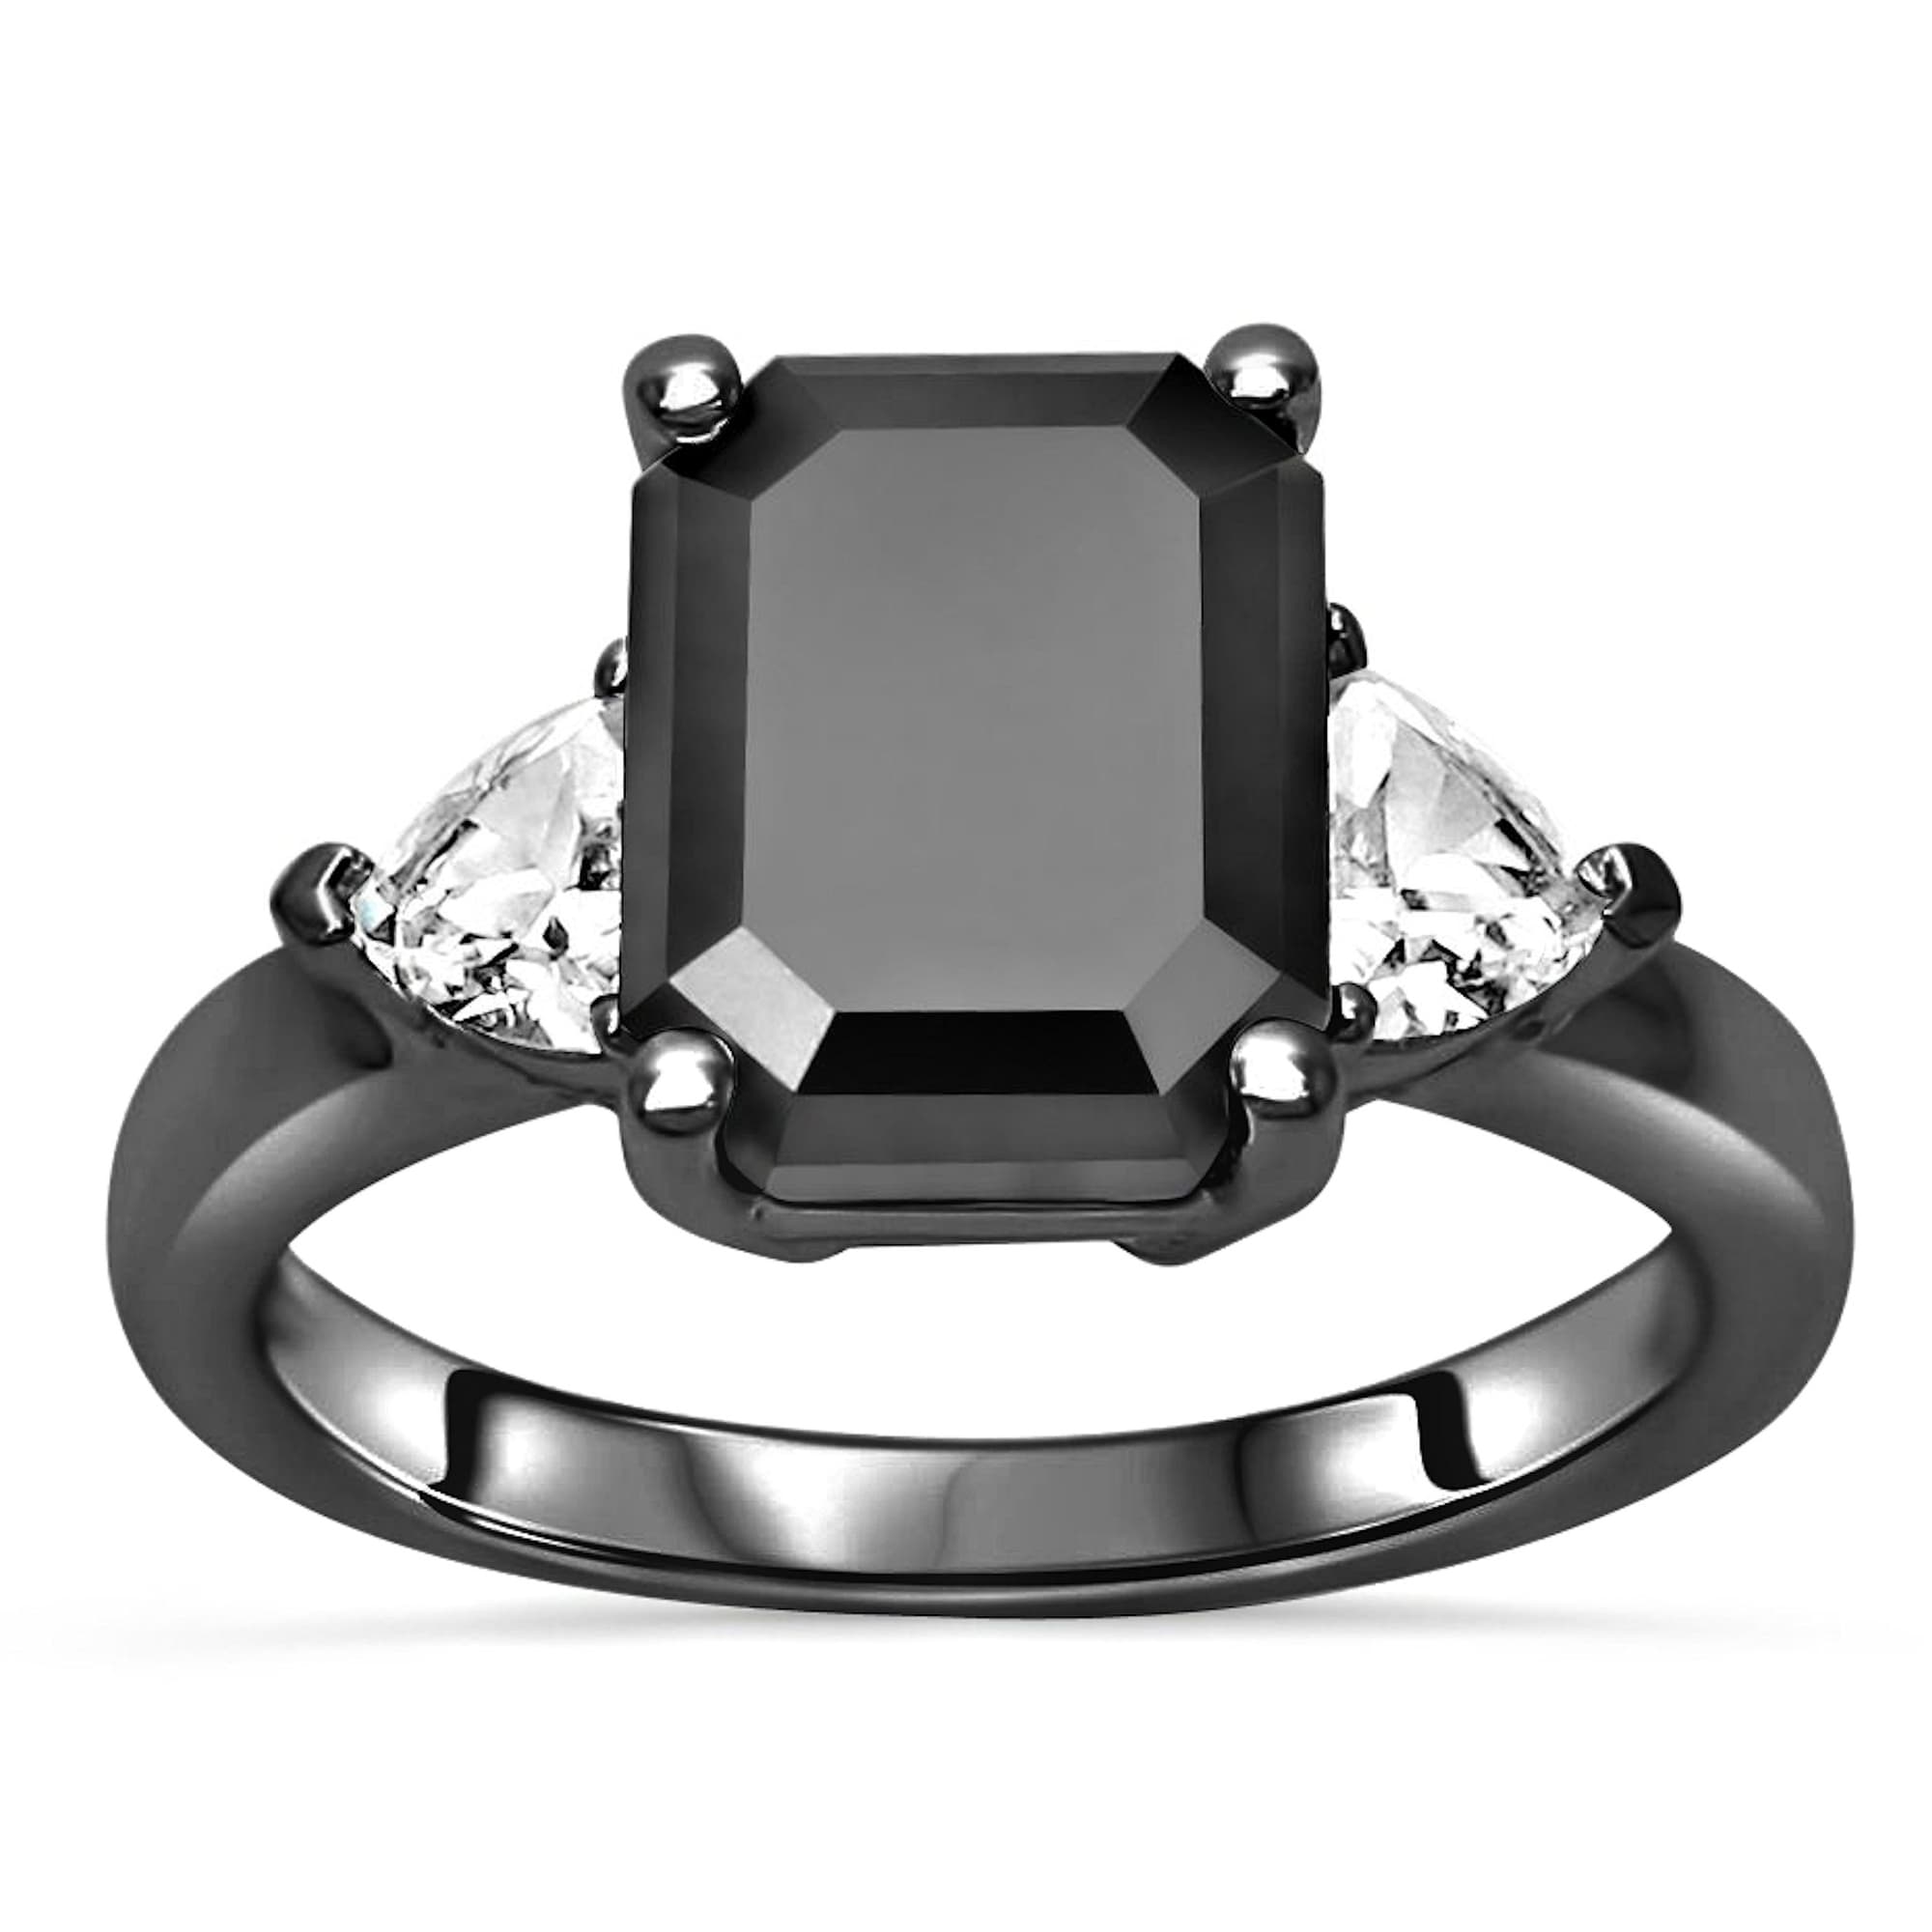 3.0ct Emerald Cut Black Diamond Nice Engagement Wedding Ring 925 Sterling Silver